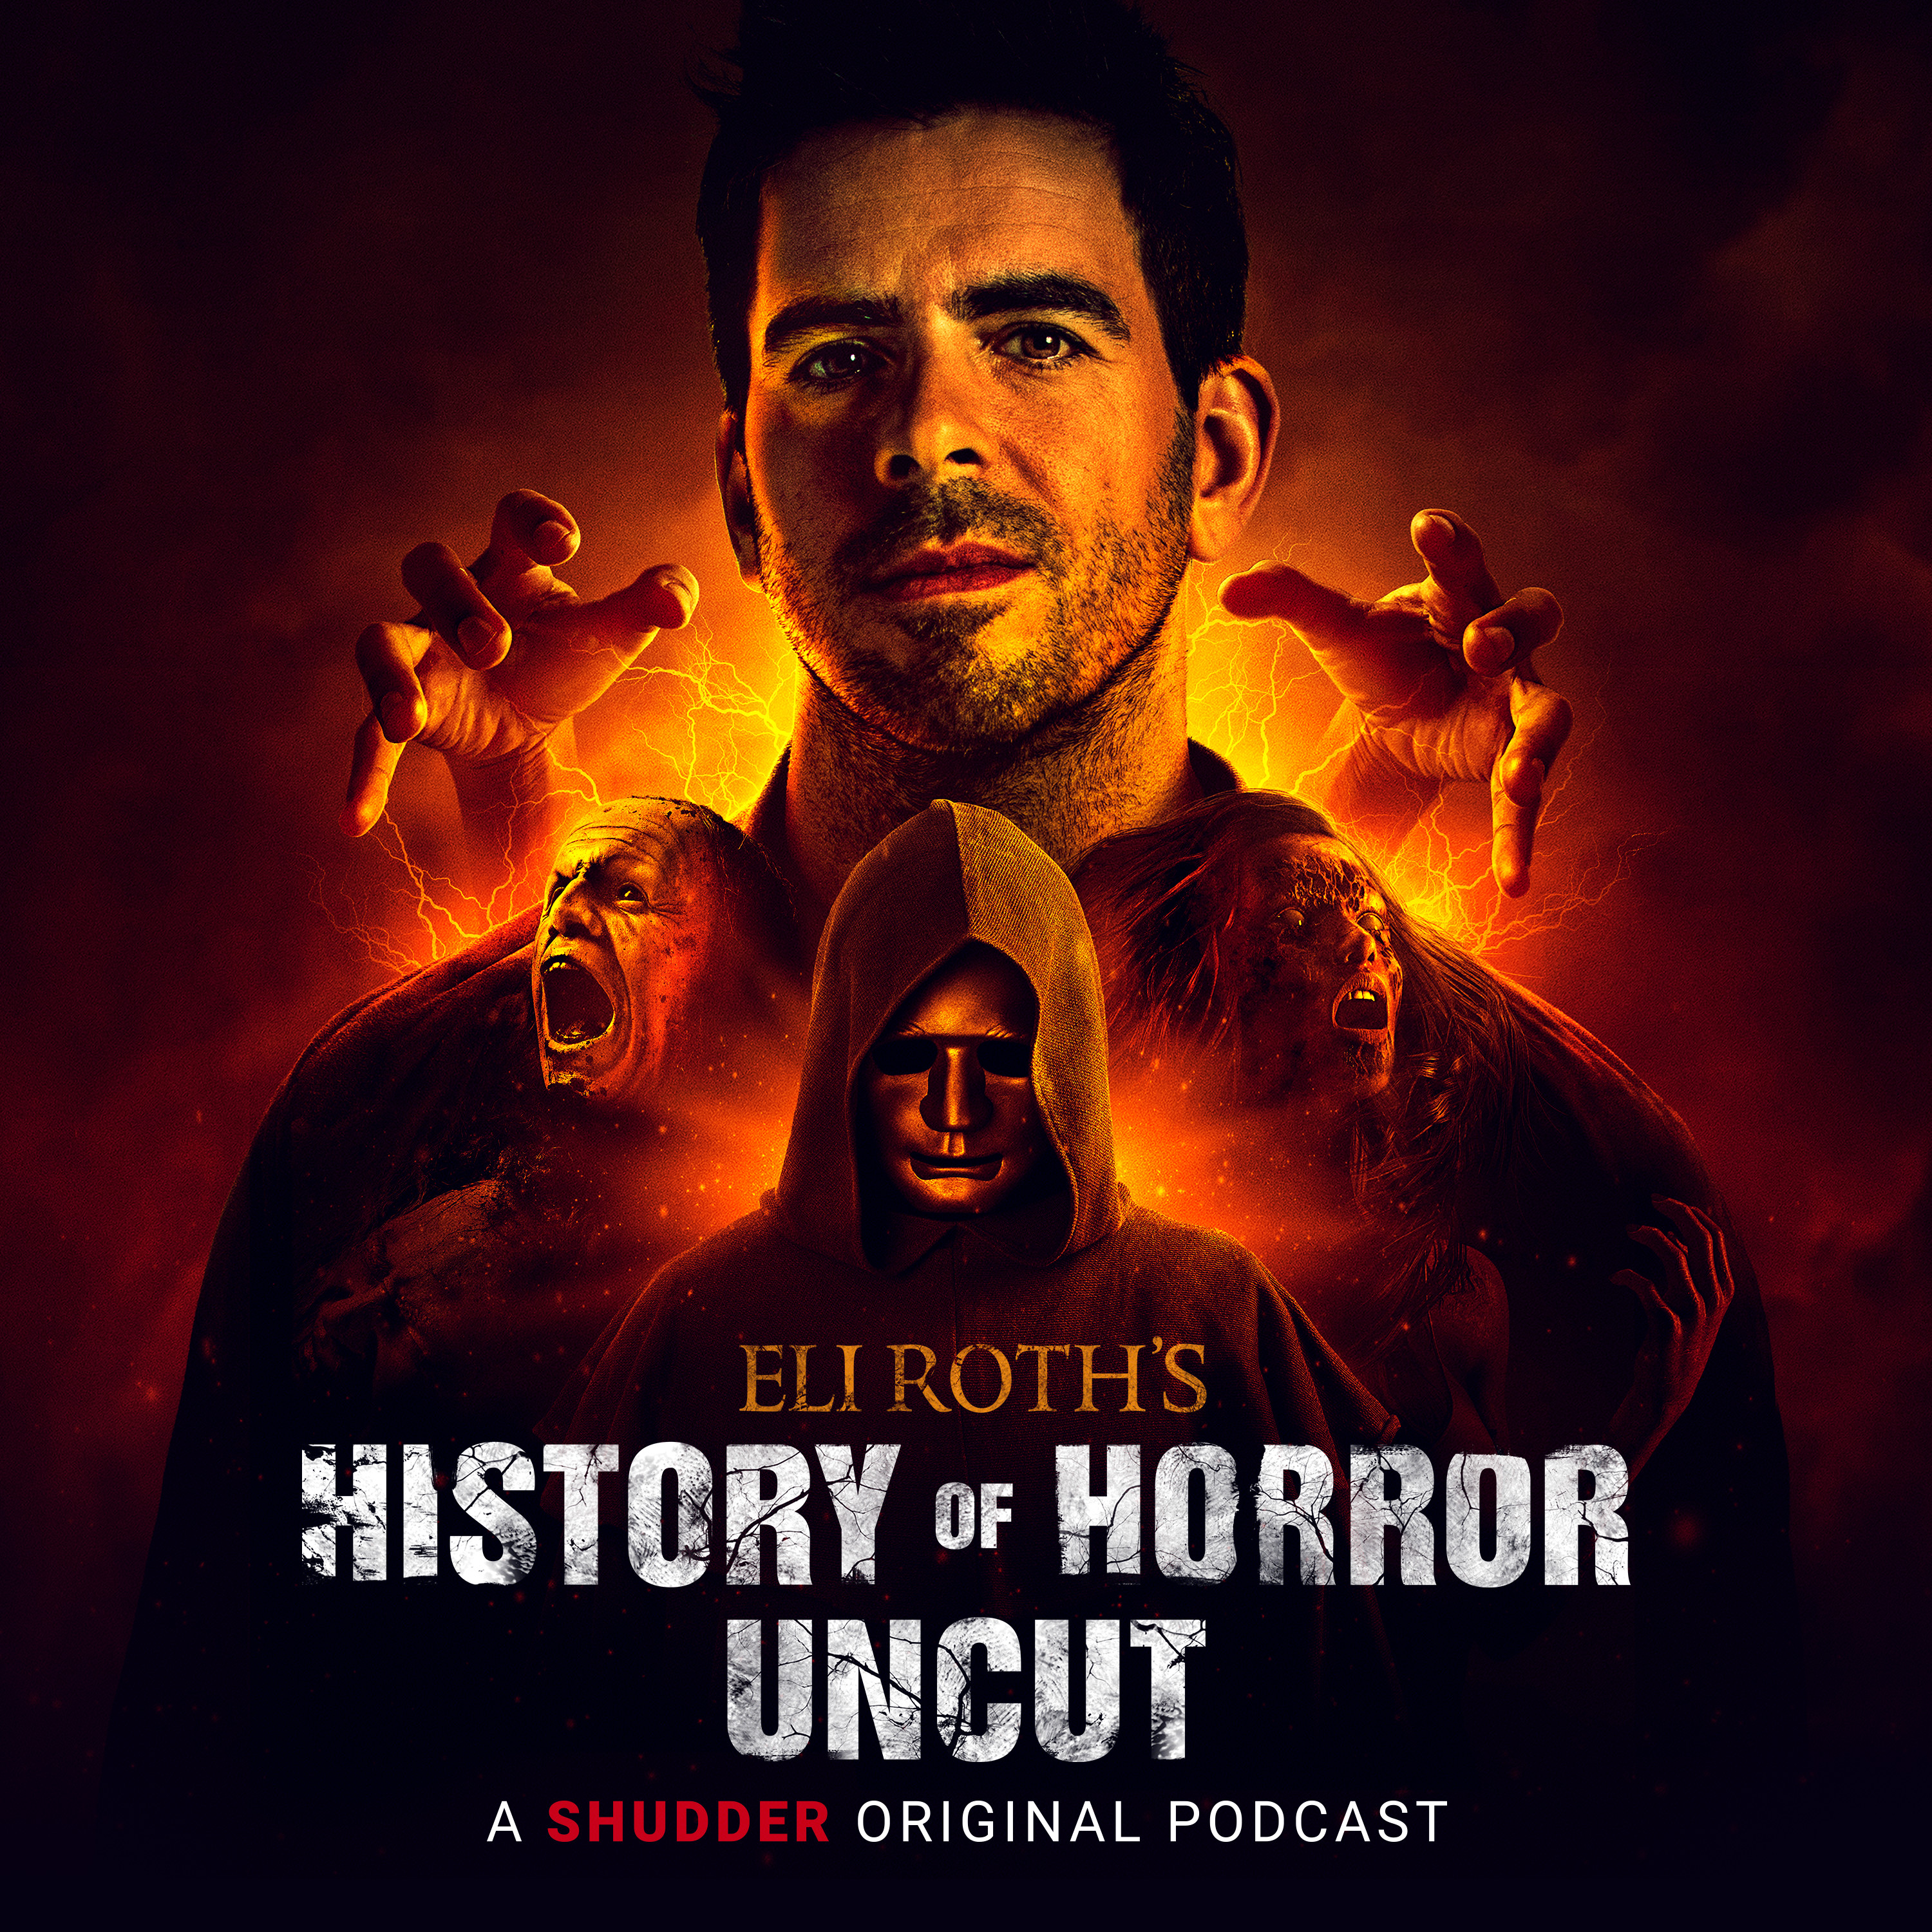 Eli Roth’s History of Horror: Uncut